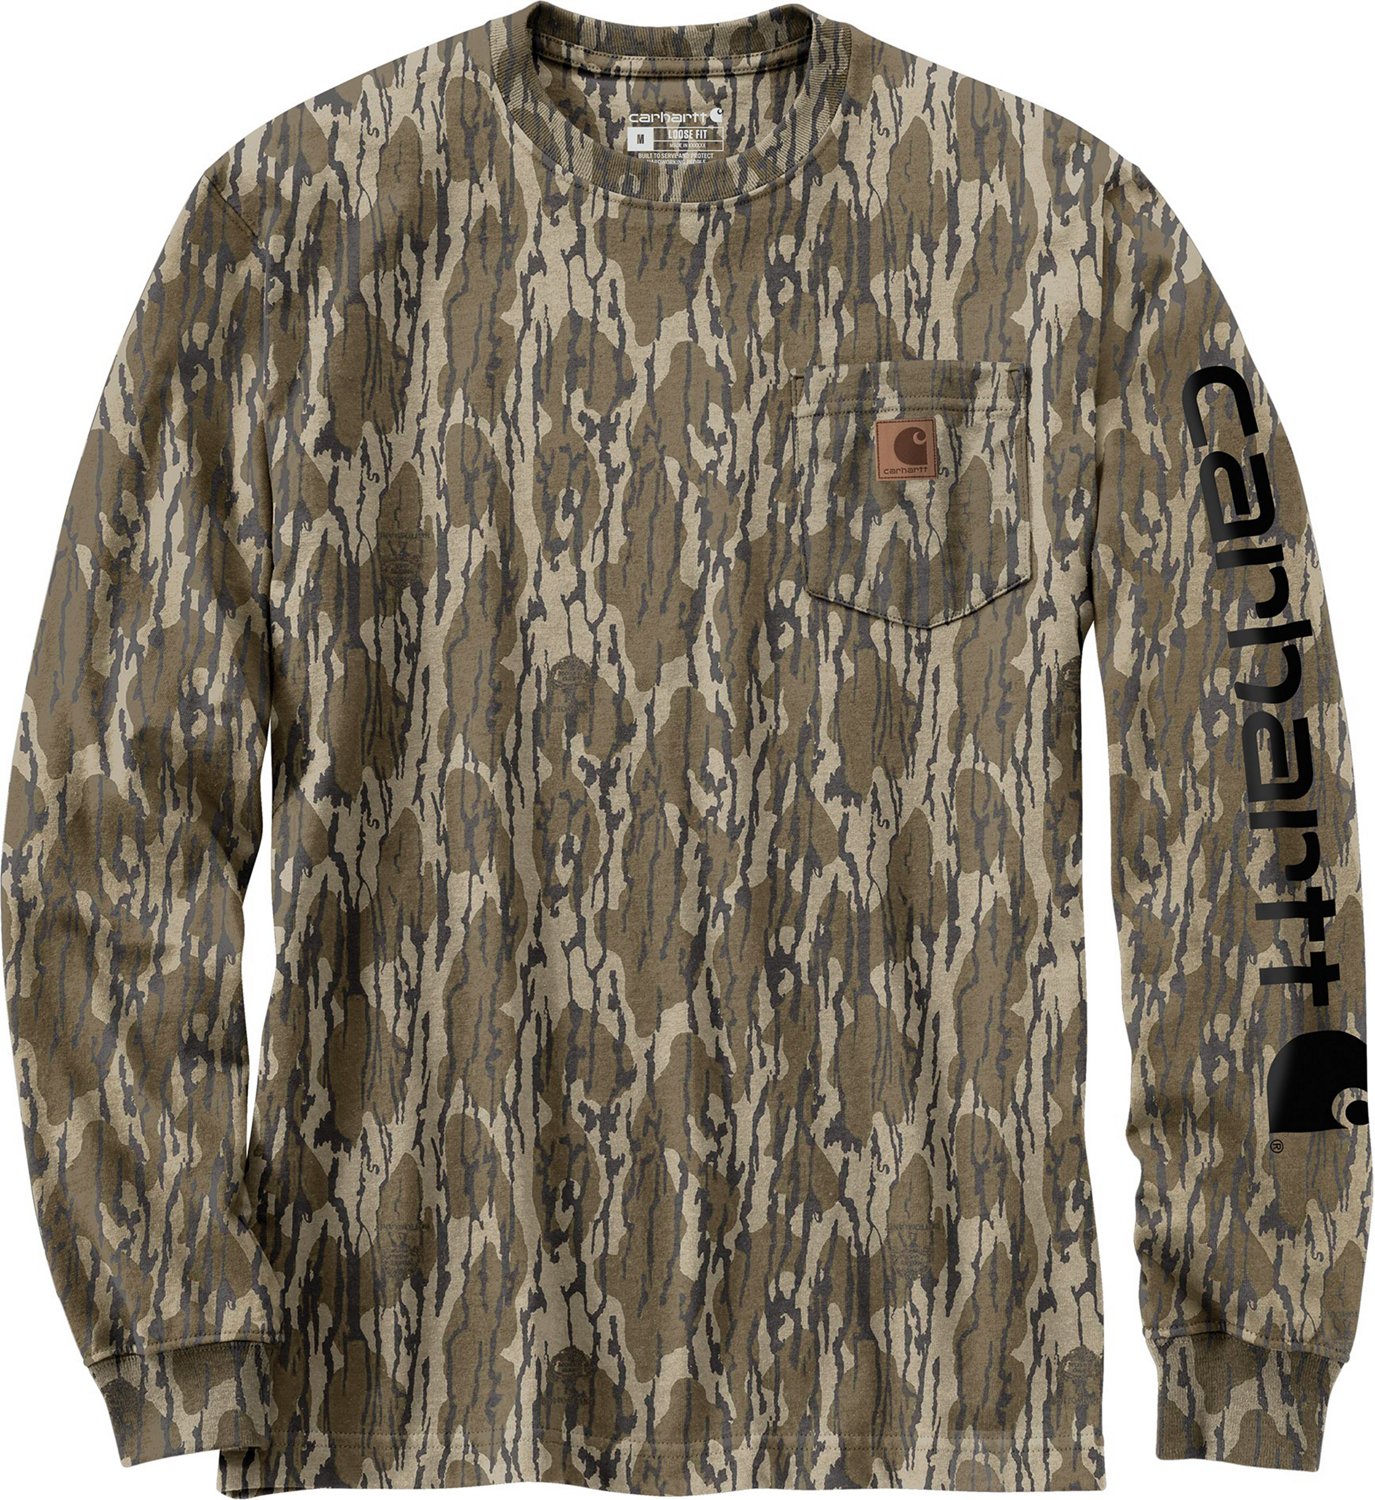 Carhartt Boys Mossy Oak Camo Long Sleeve Graphic Sweatshirt